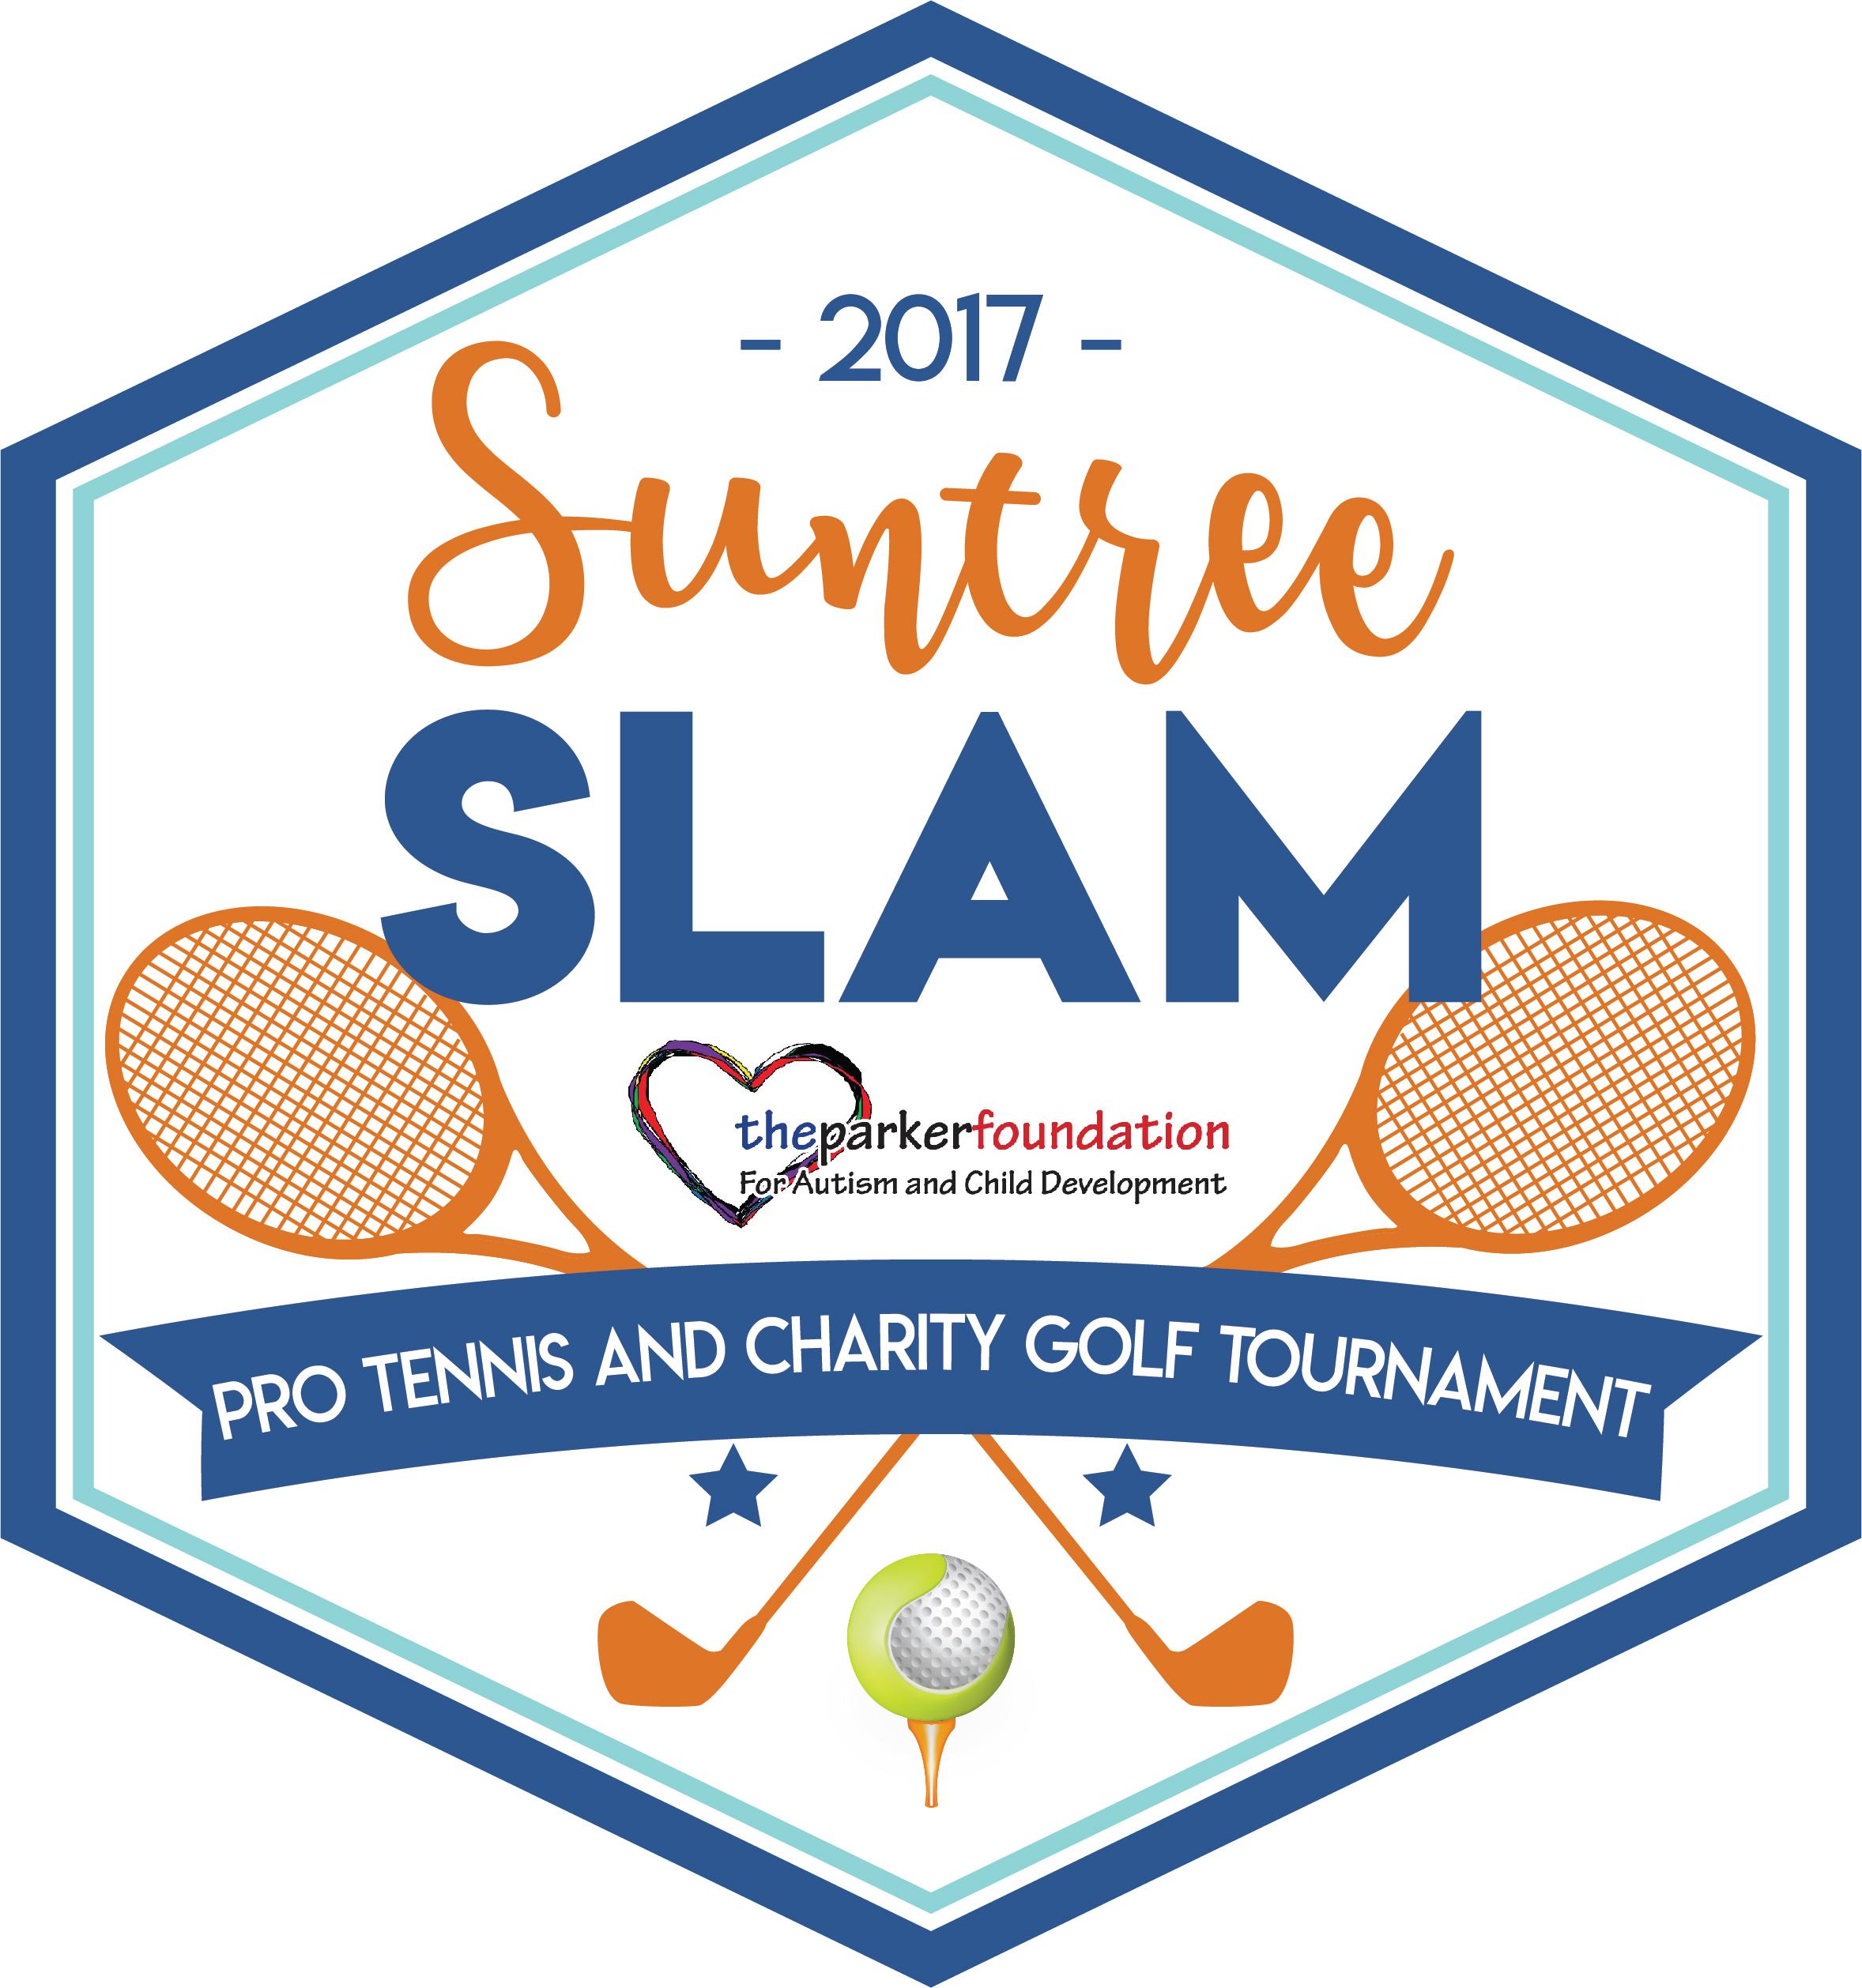 8th Annual Suntree Slam Golf, Tennis & Oktoberfest Weekend